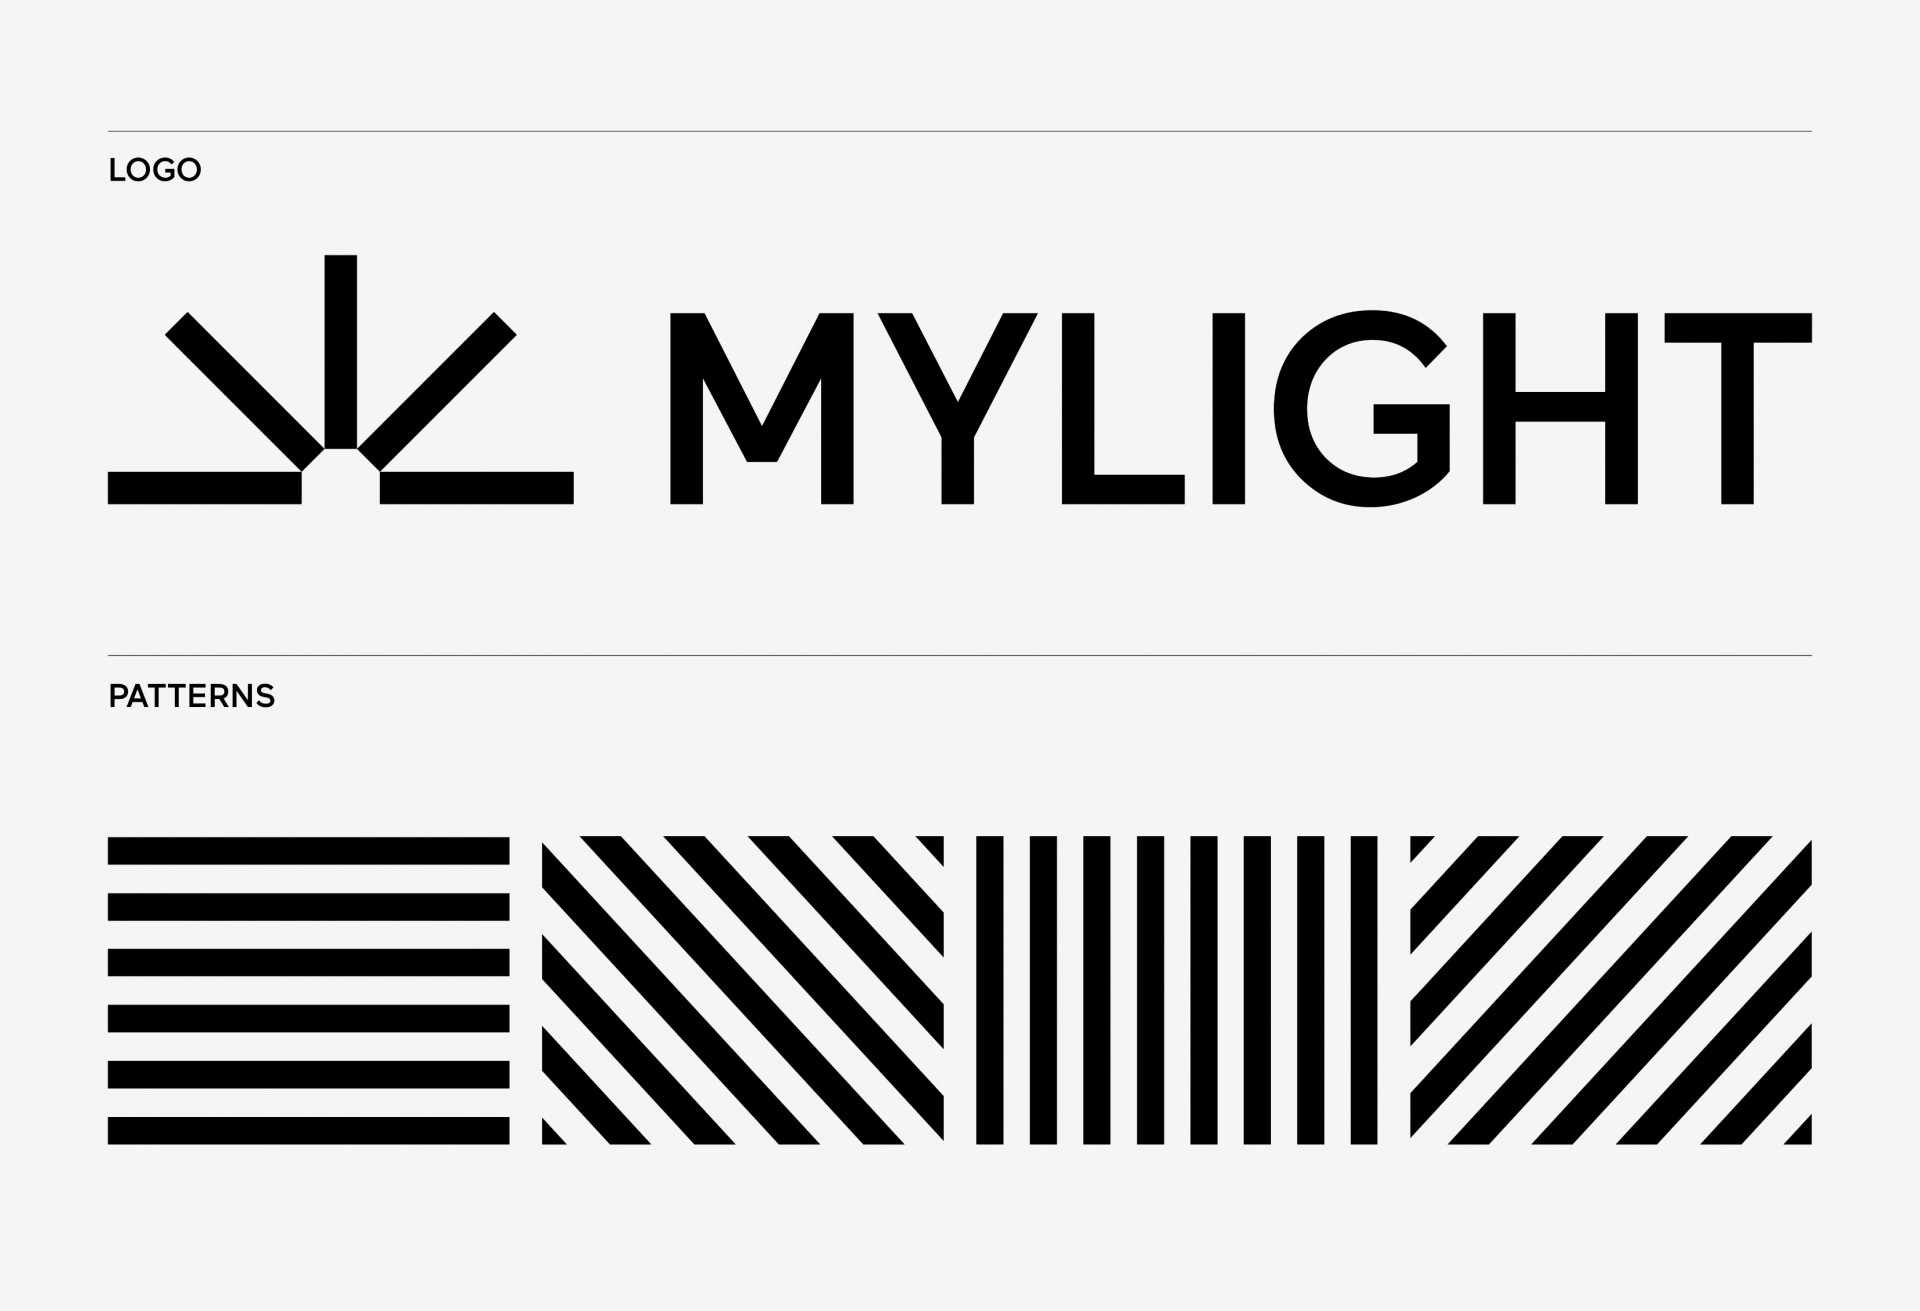 MyLight